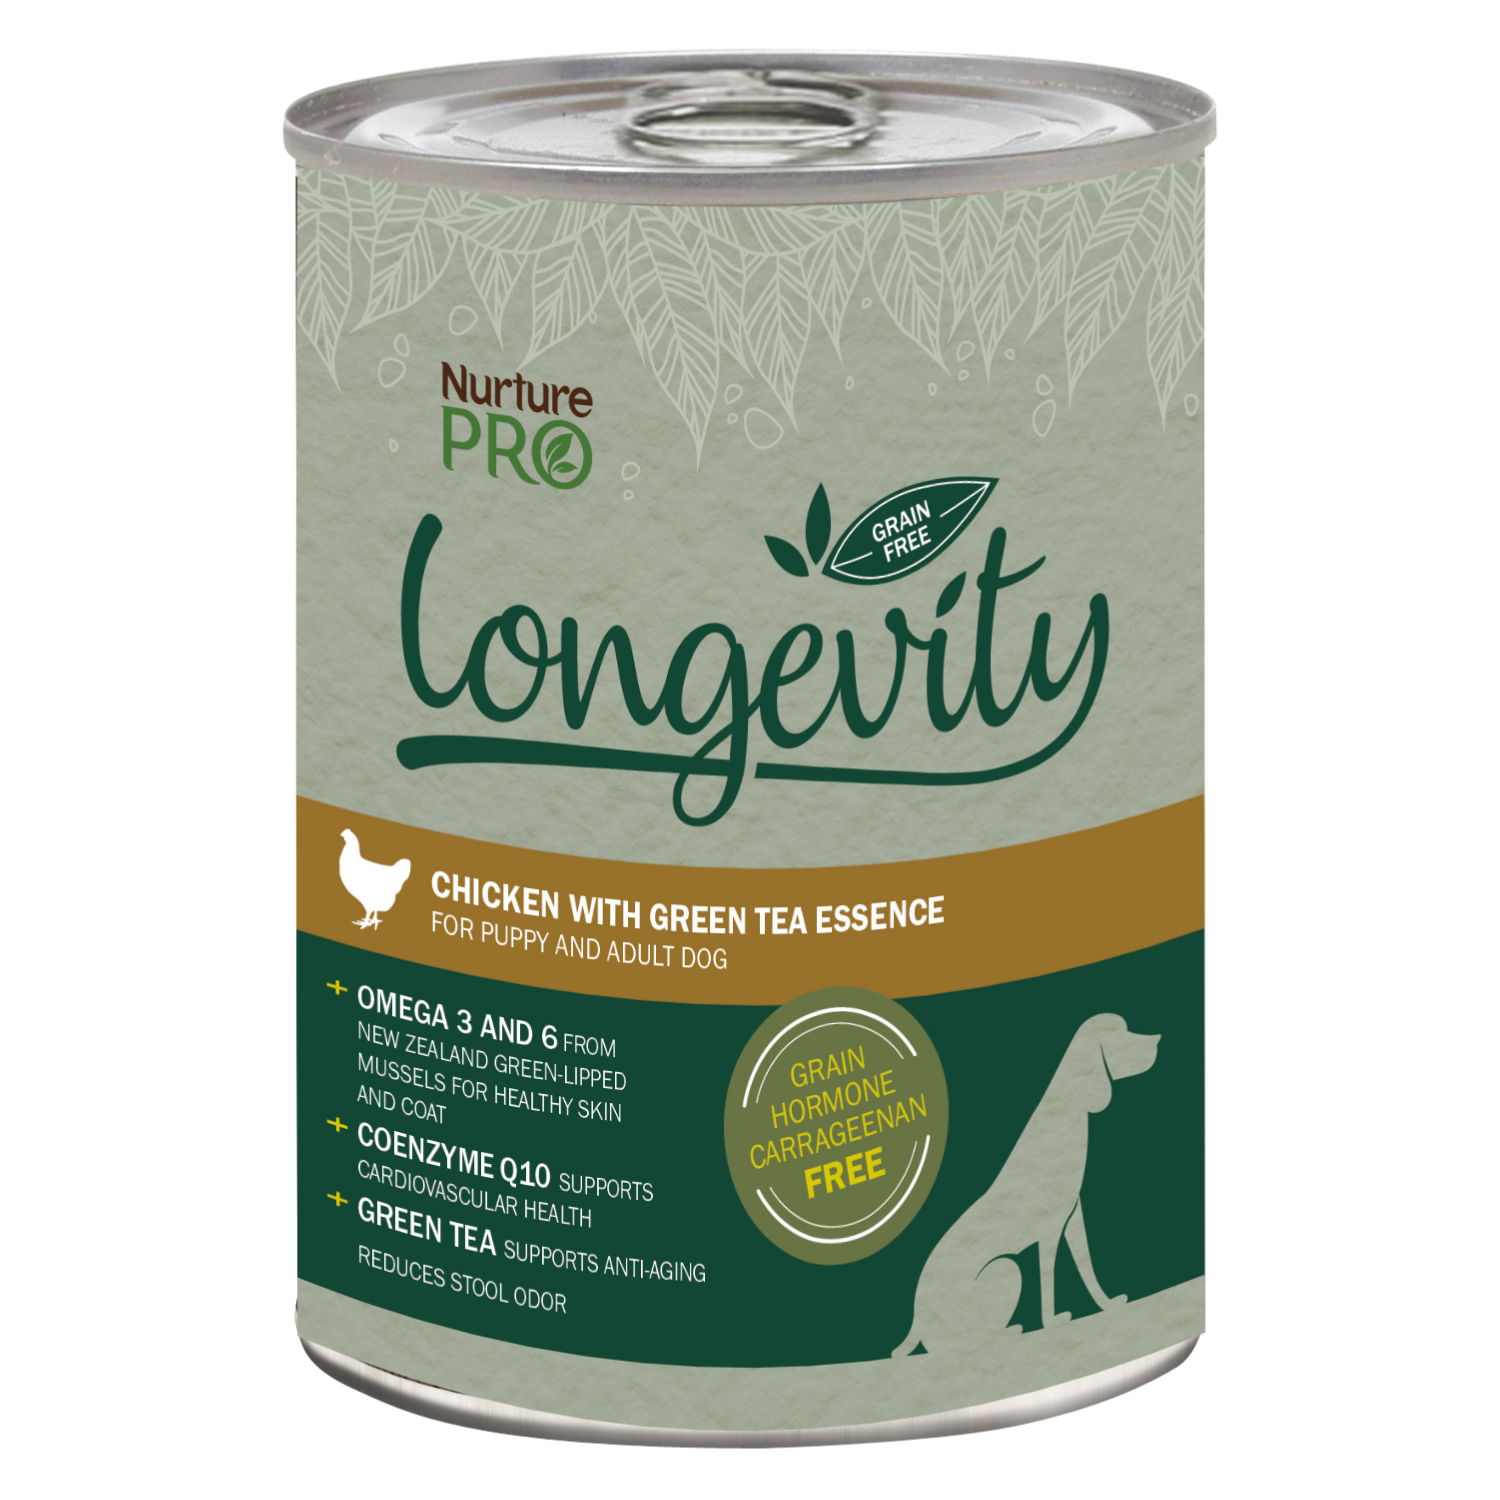 Nurture Pro Longevity (Chicken with Green Tea) Essence - 12 Cans